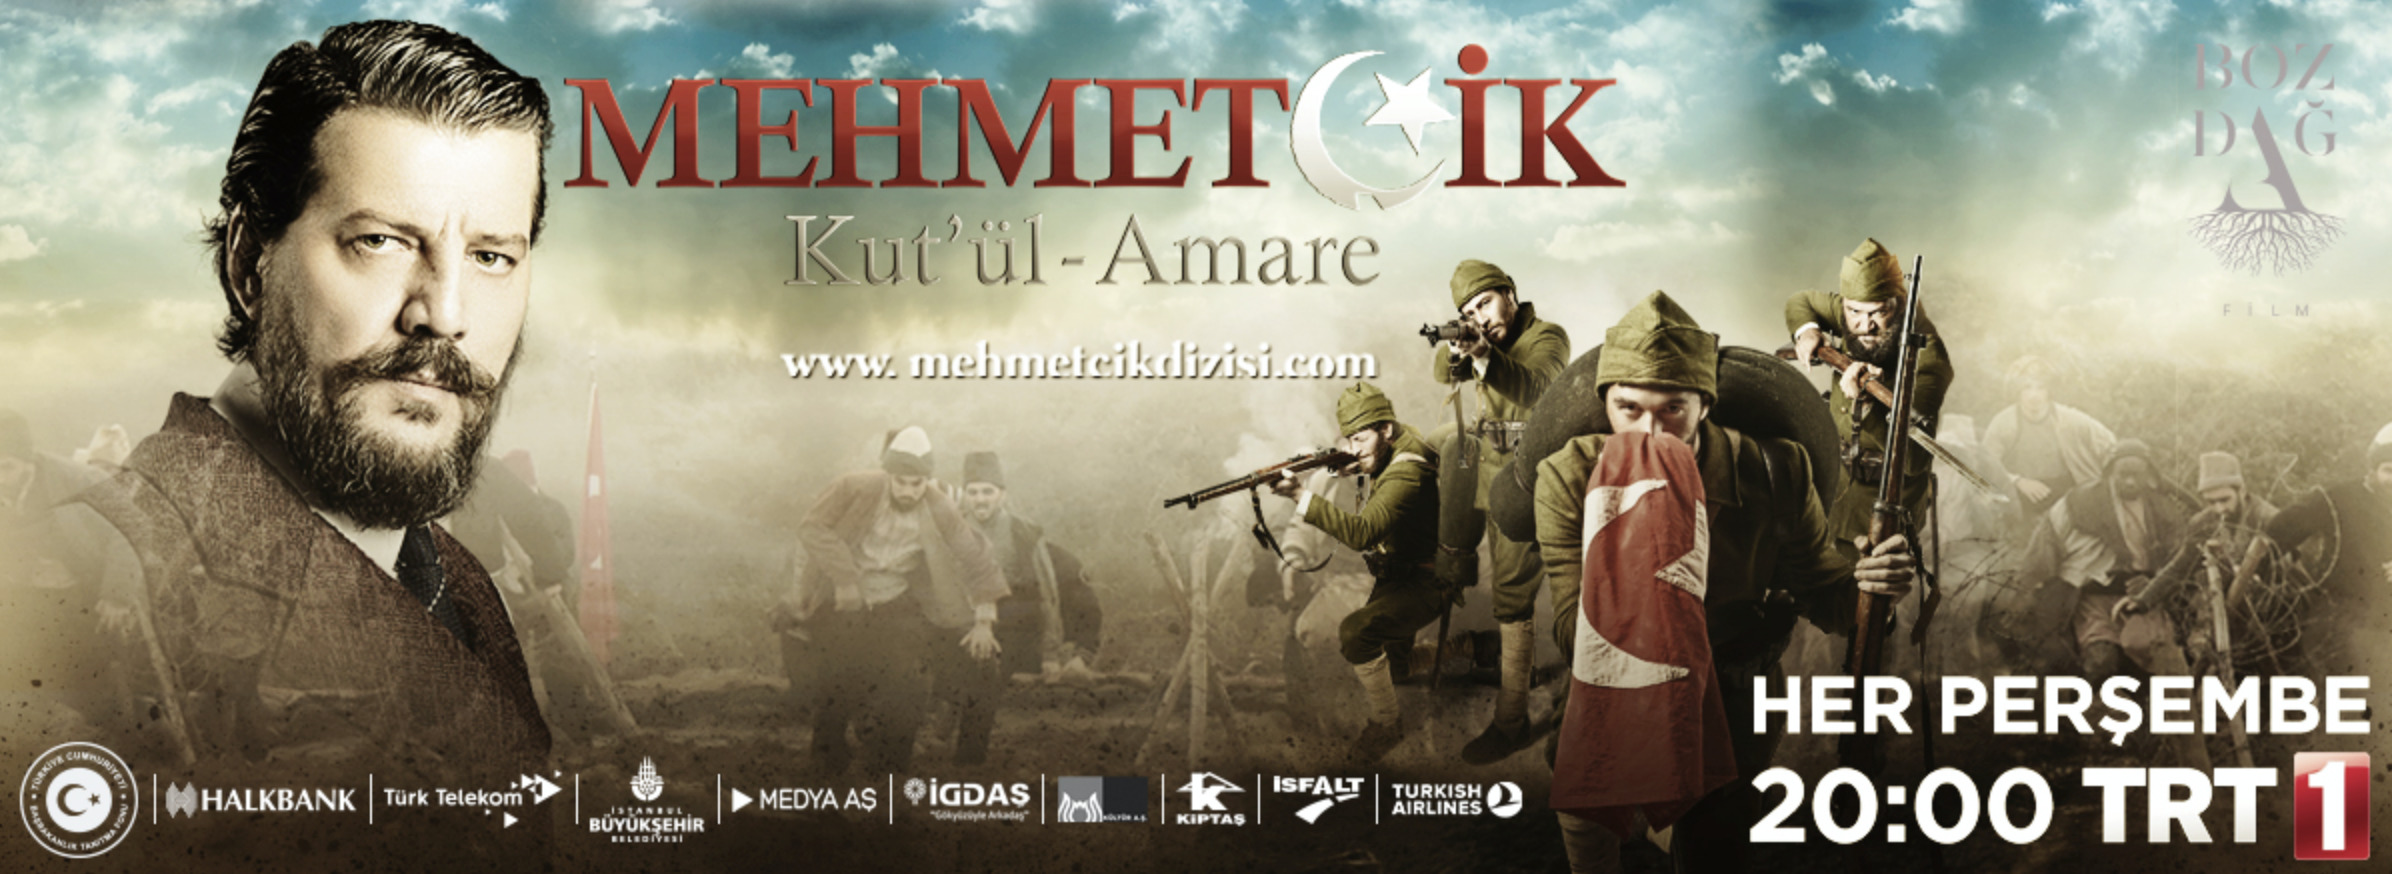 Mega Sized TV Poster Image for Mehmetçik Kut'ül Amare (#28 of 41)